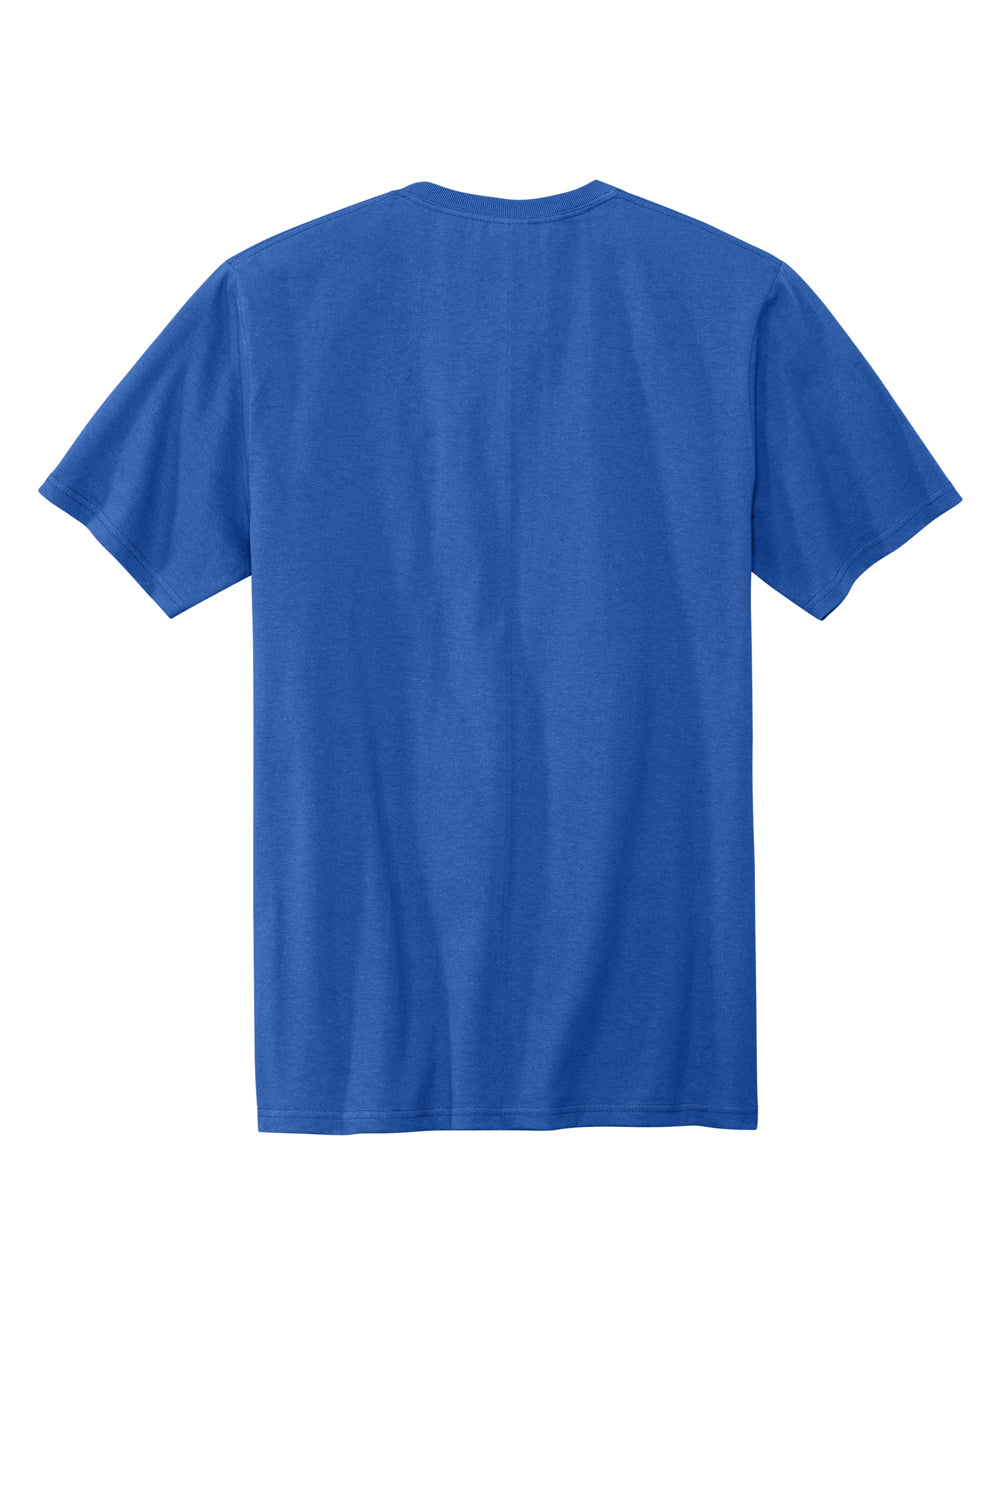 Volunteer Knitwear VL100 USA Made All American Short Sleeve Crewneck T-Shirts True Royal Blue Flat Back